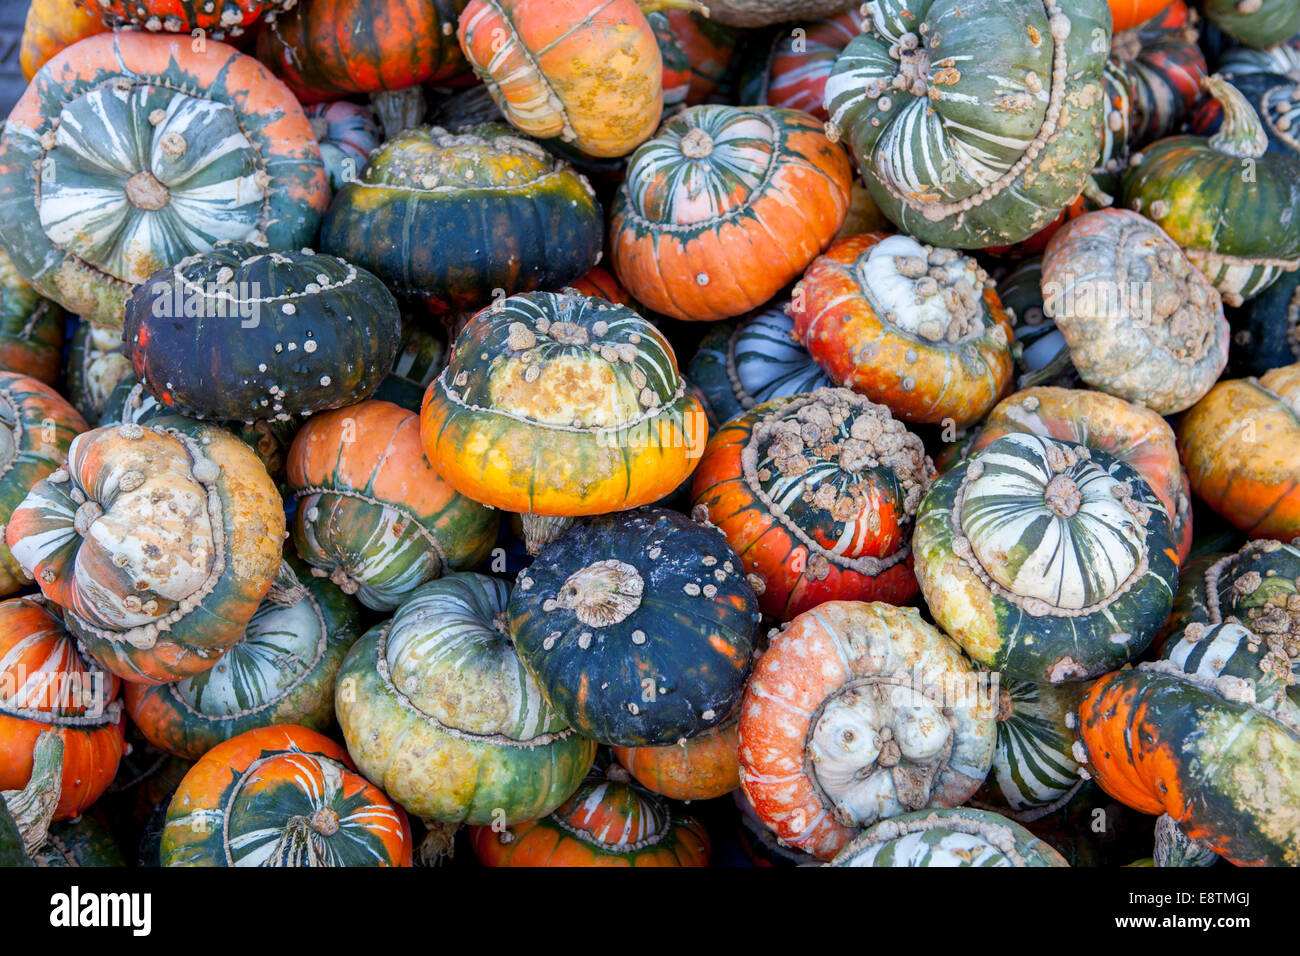 Turk's Turban Pumpkin, (Cucurbita maxima) Stock Photo